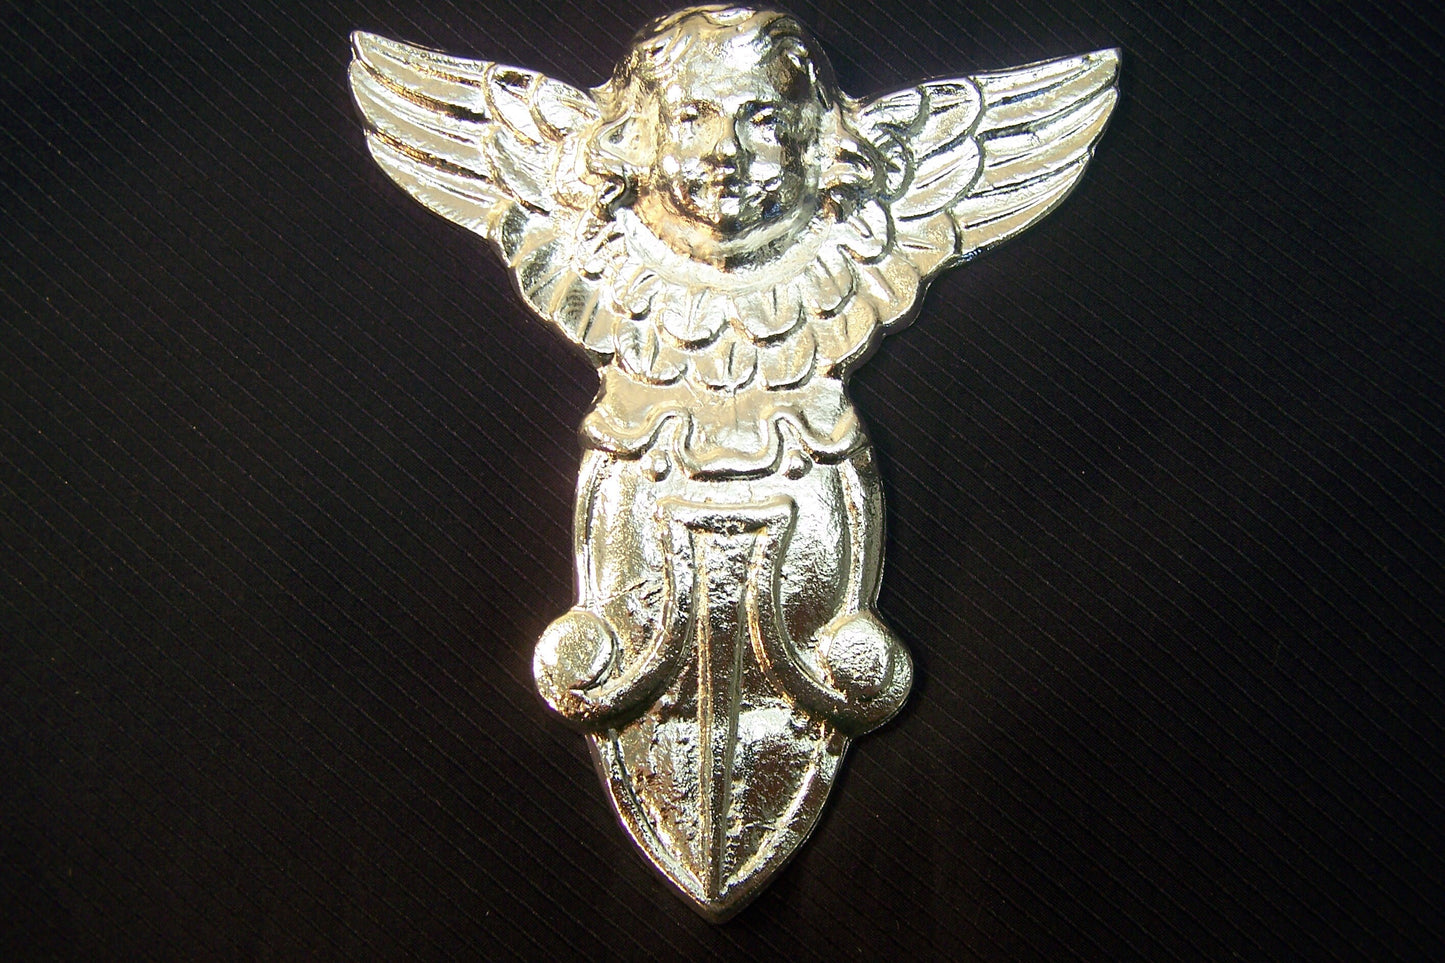 Angel with Shield Pot Metal Milagro Ex Voto - Mexico